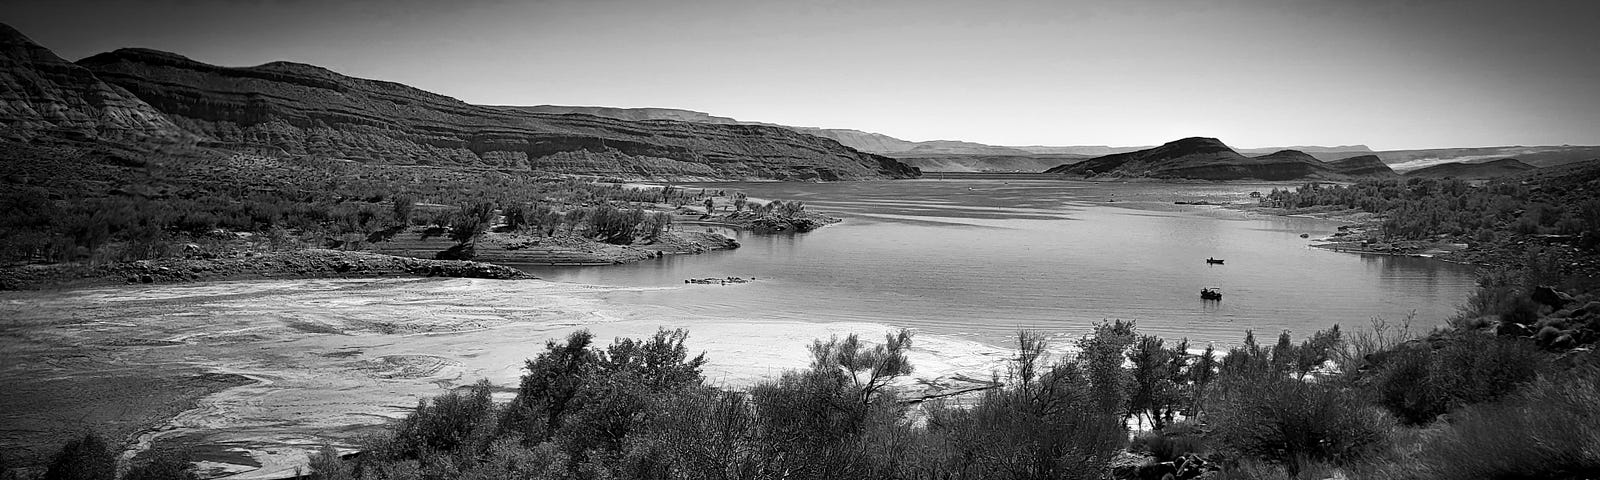 Quail Creek State Park, Utah in black and white.